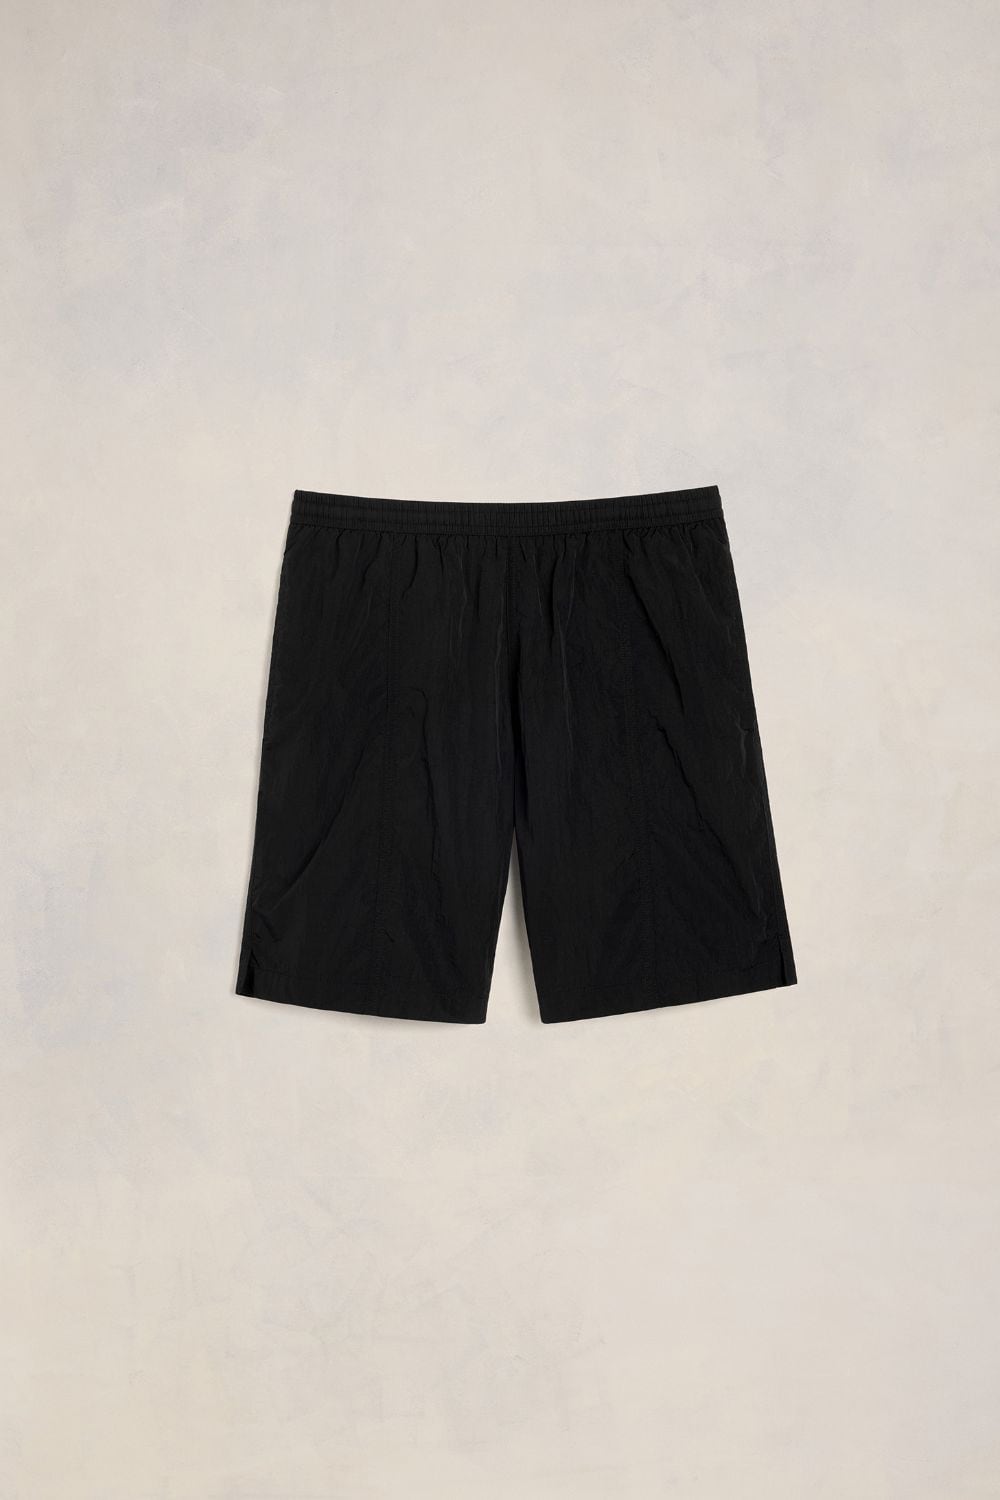 Shop Ami Alexandre Mattiussi Swim Shorts Black For Men